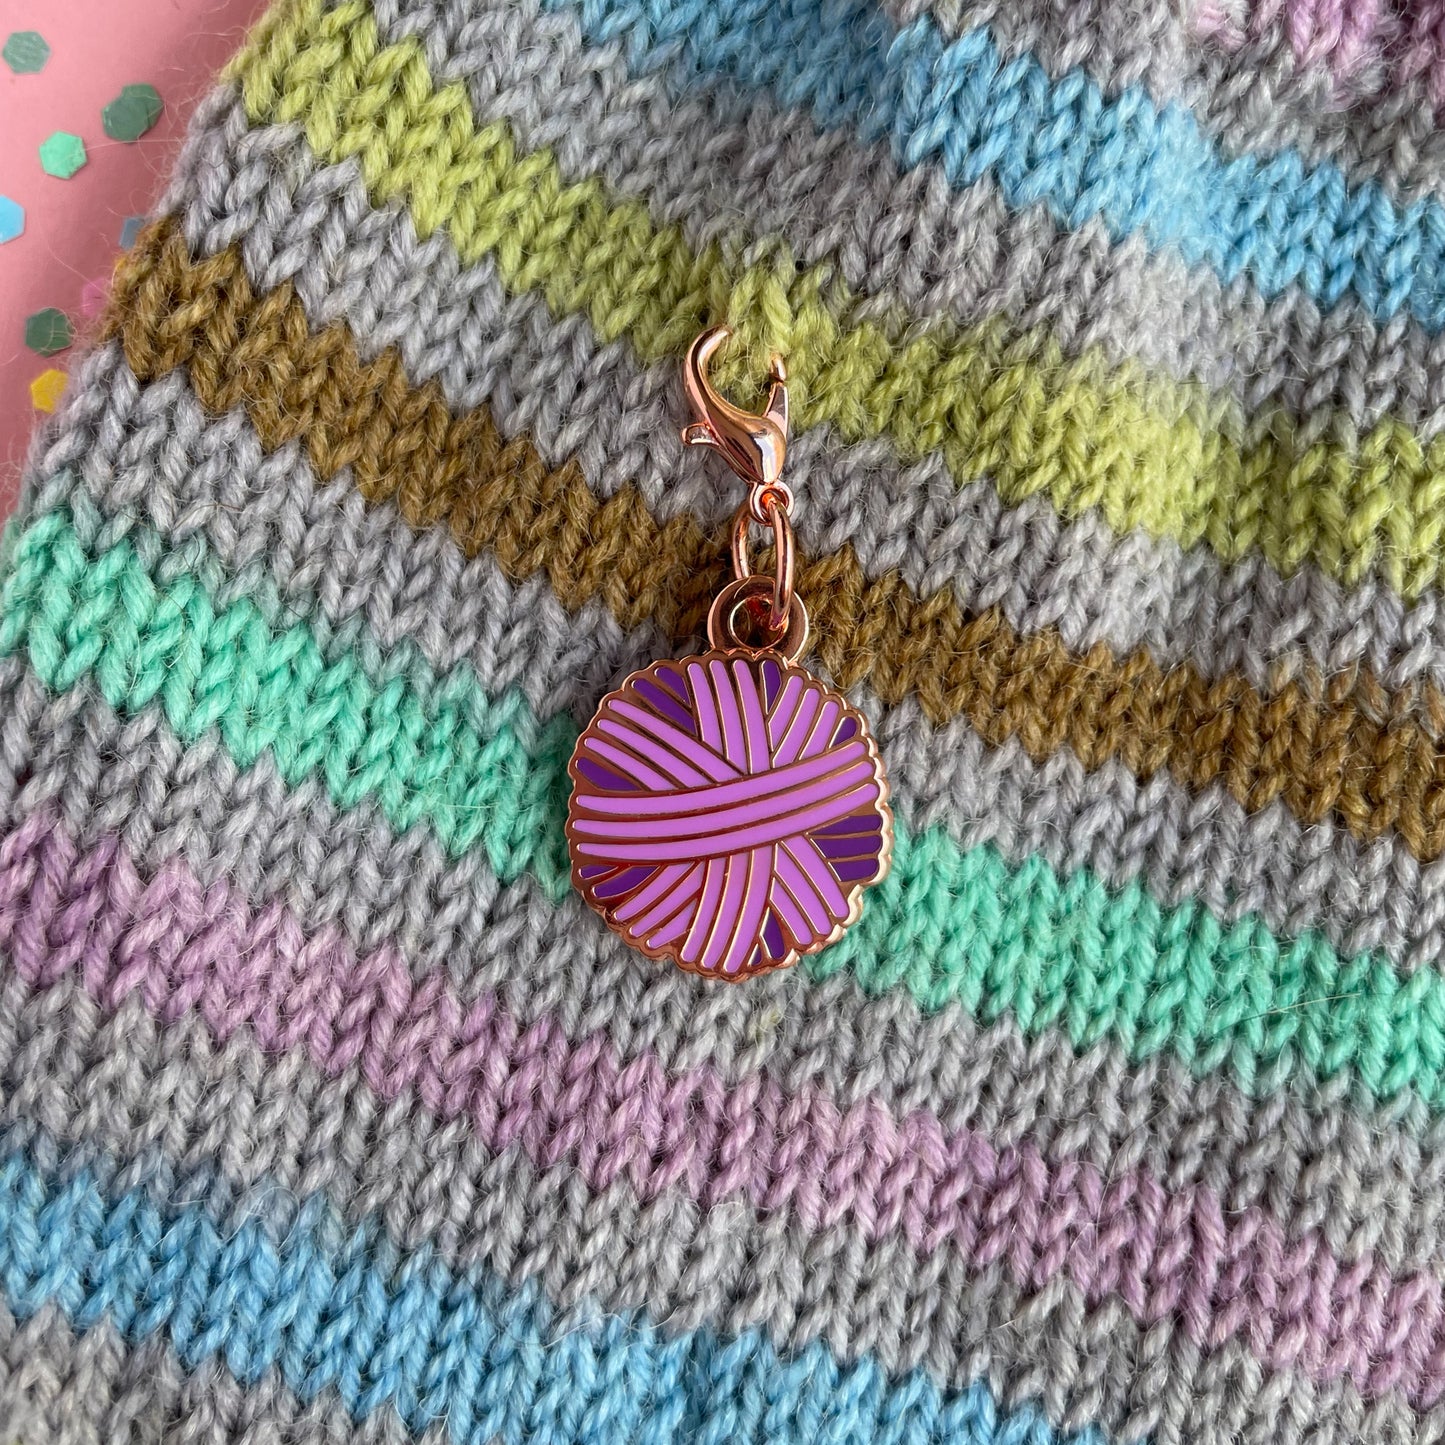 A purple yarn ball charm on a hand knit background.